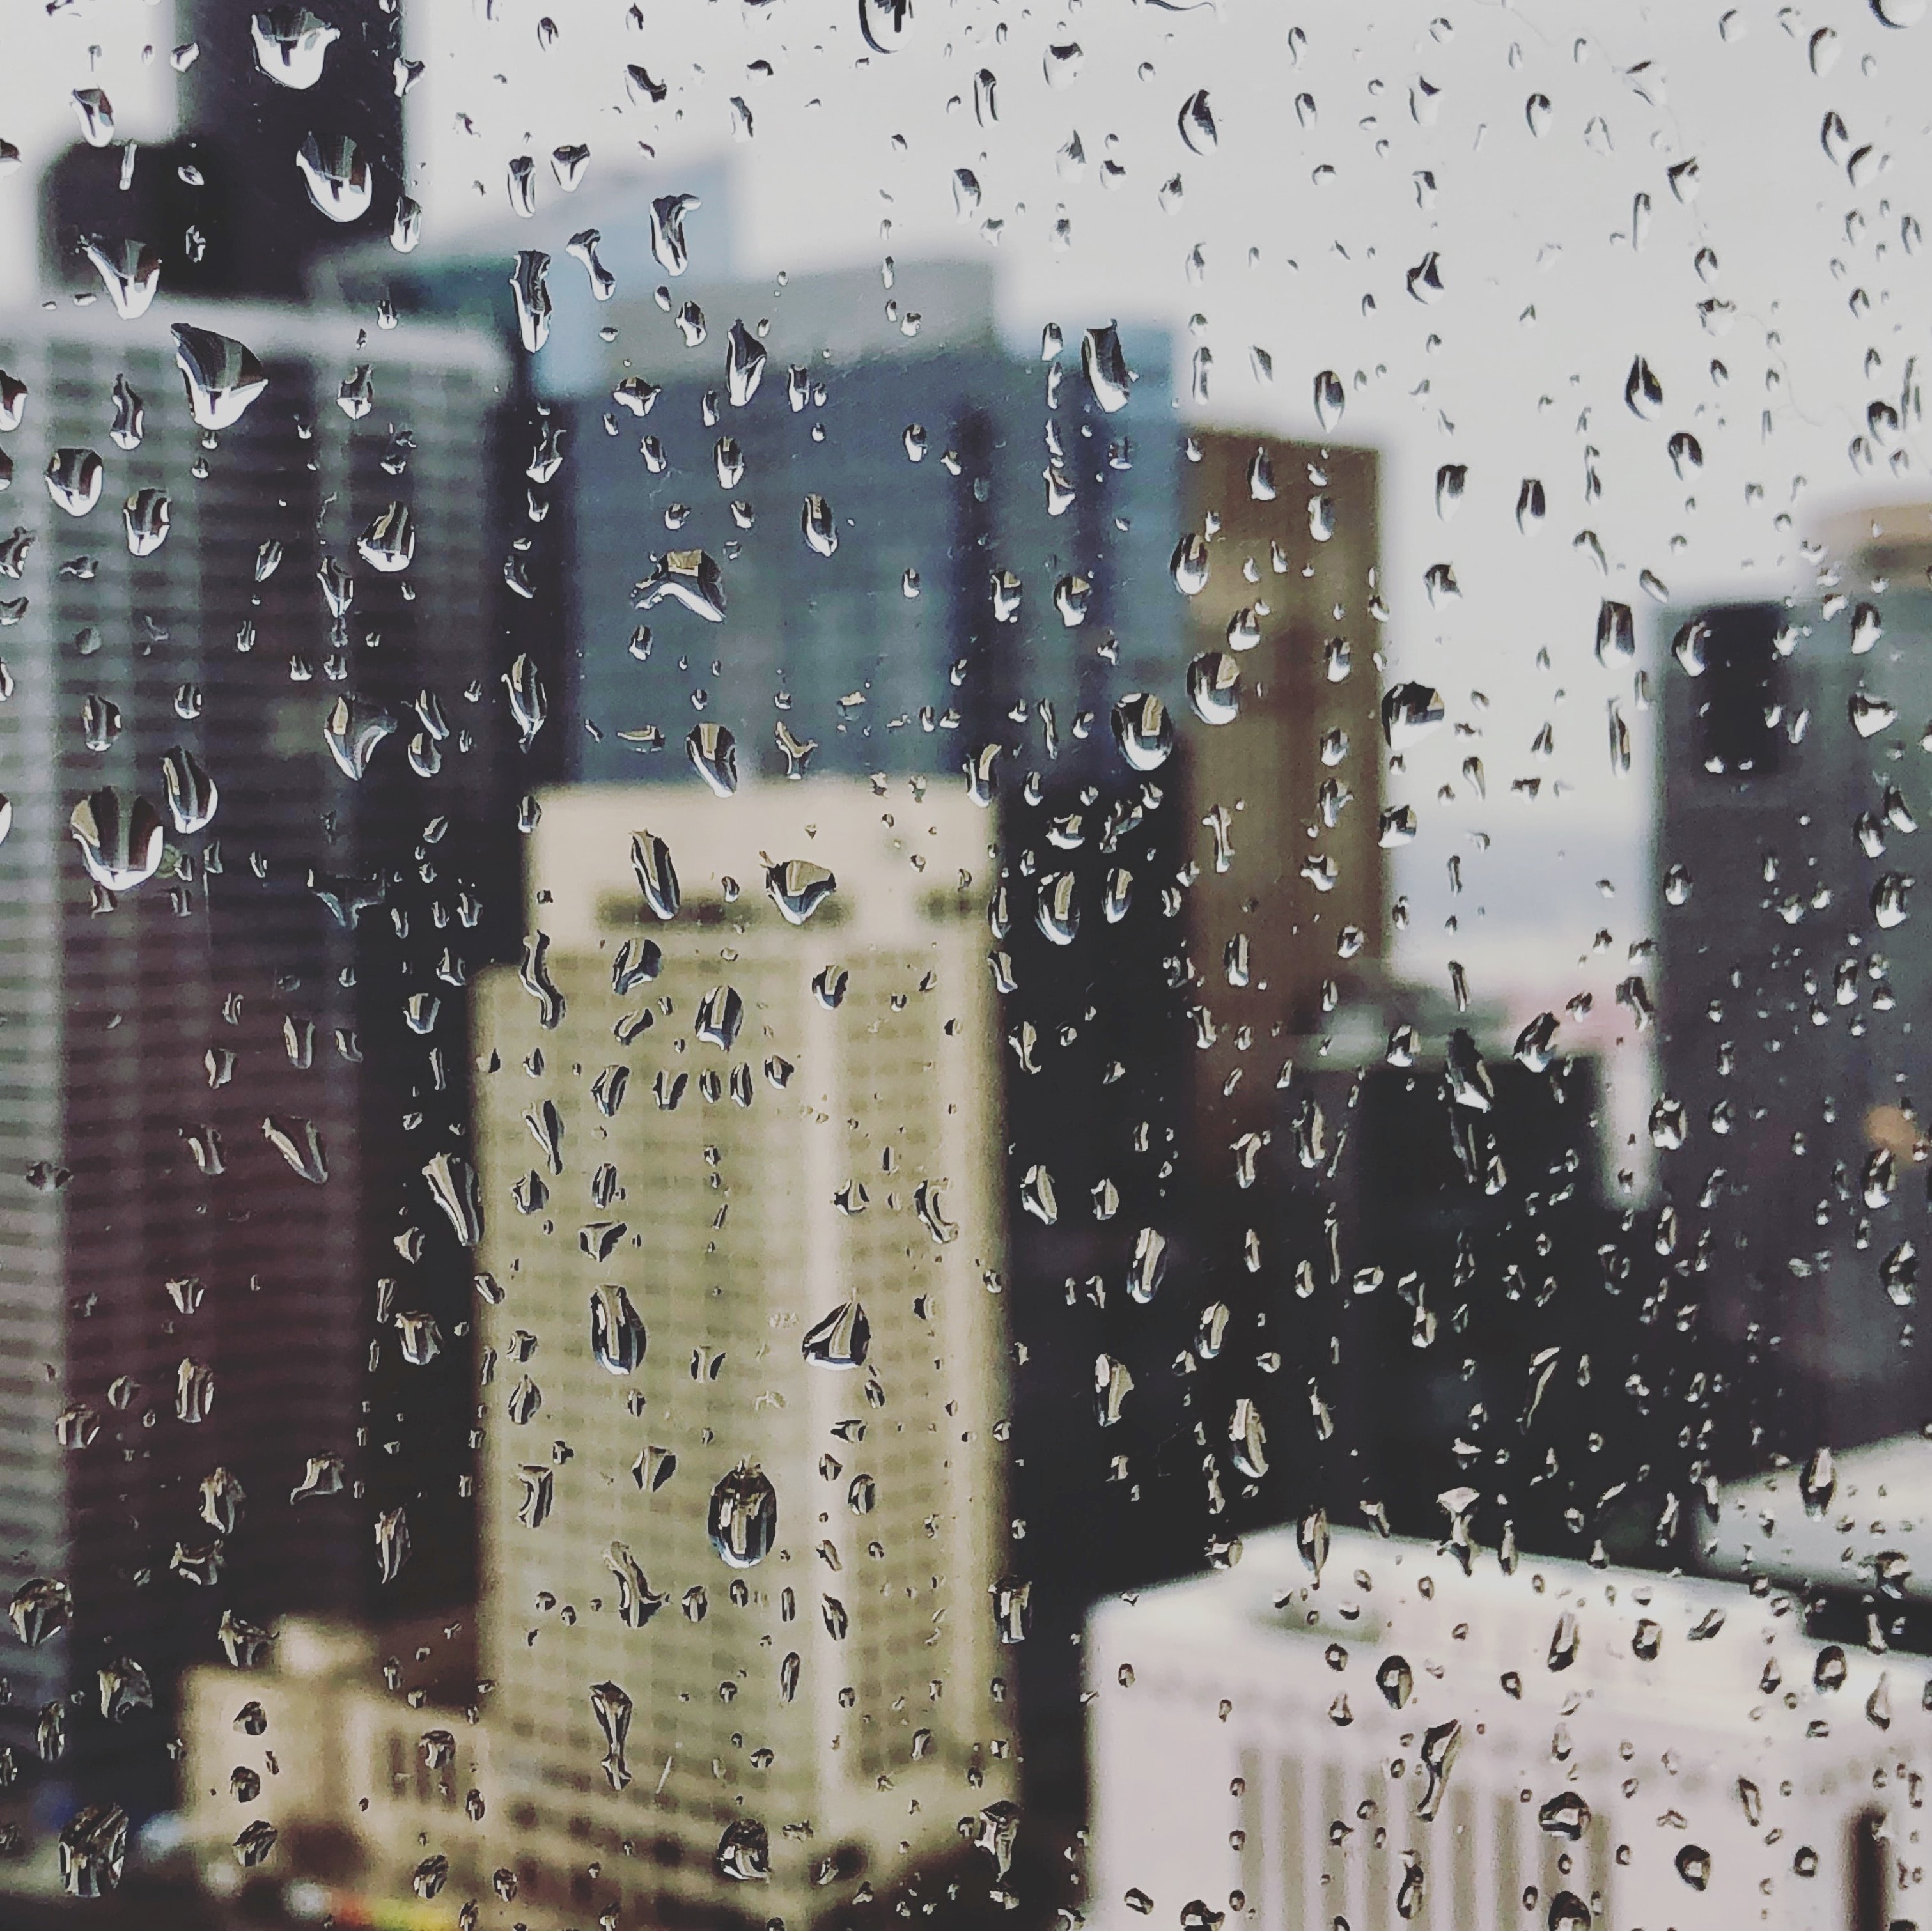 Rain on a window overlooking the Seattle downtown skyline